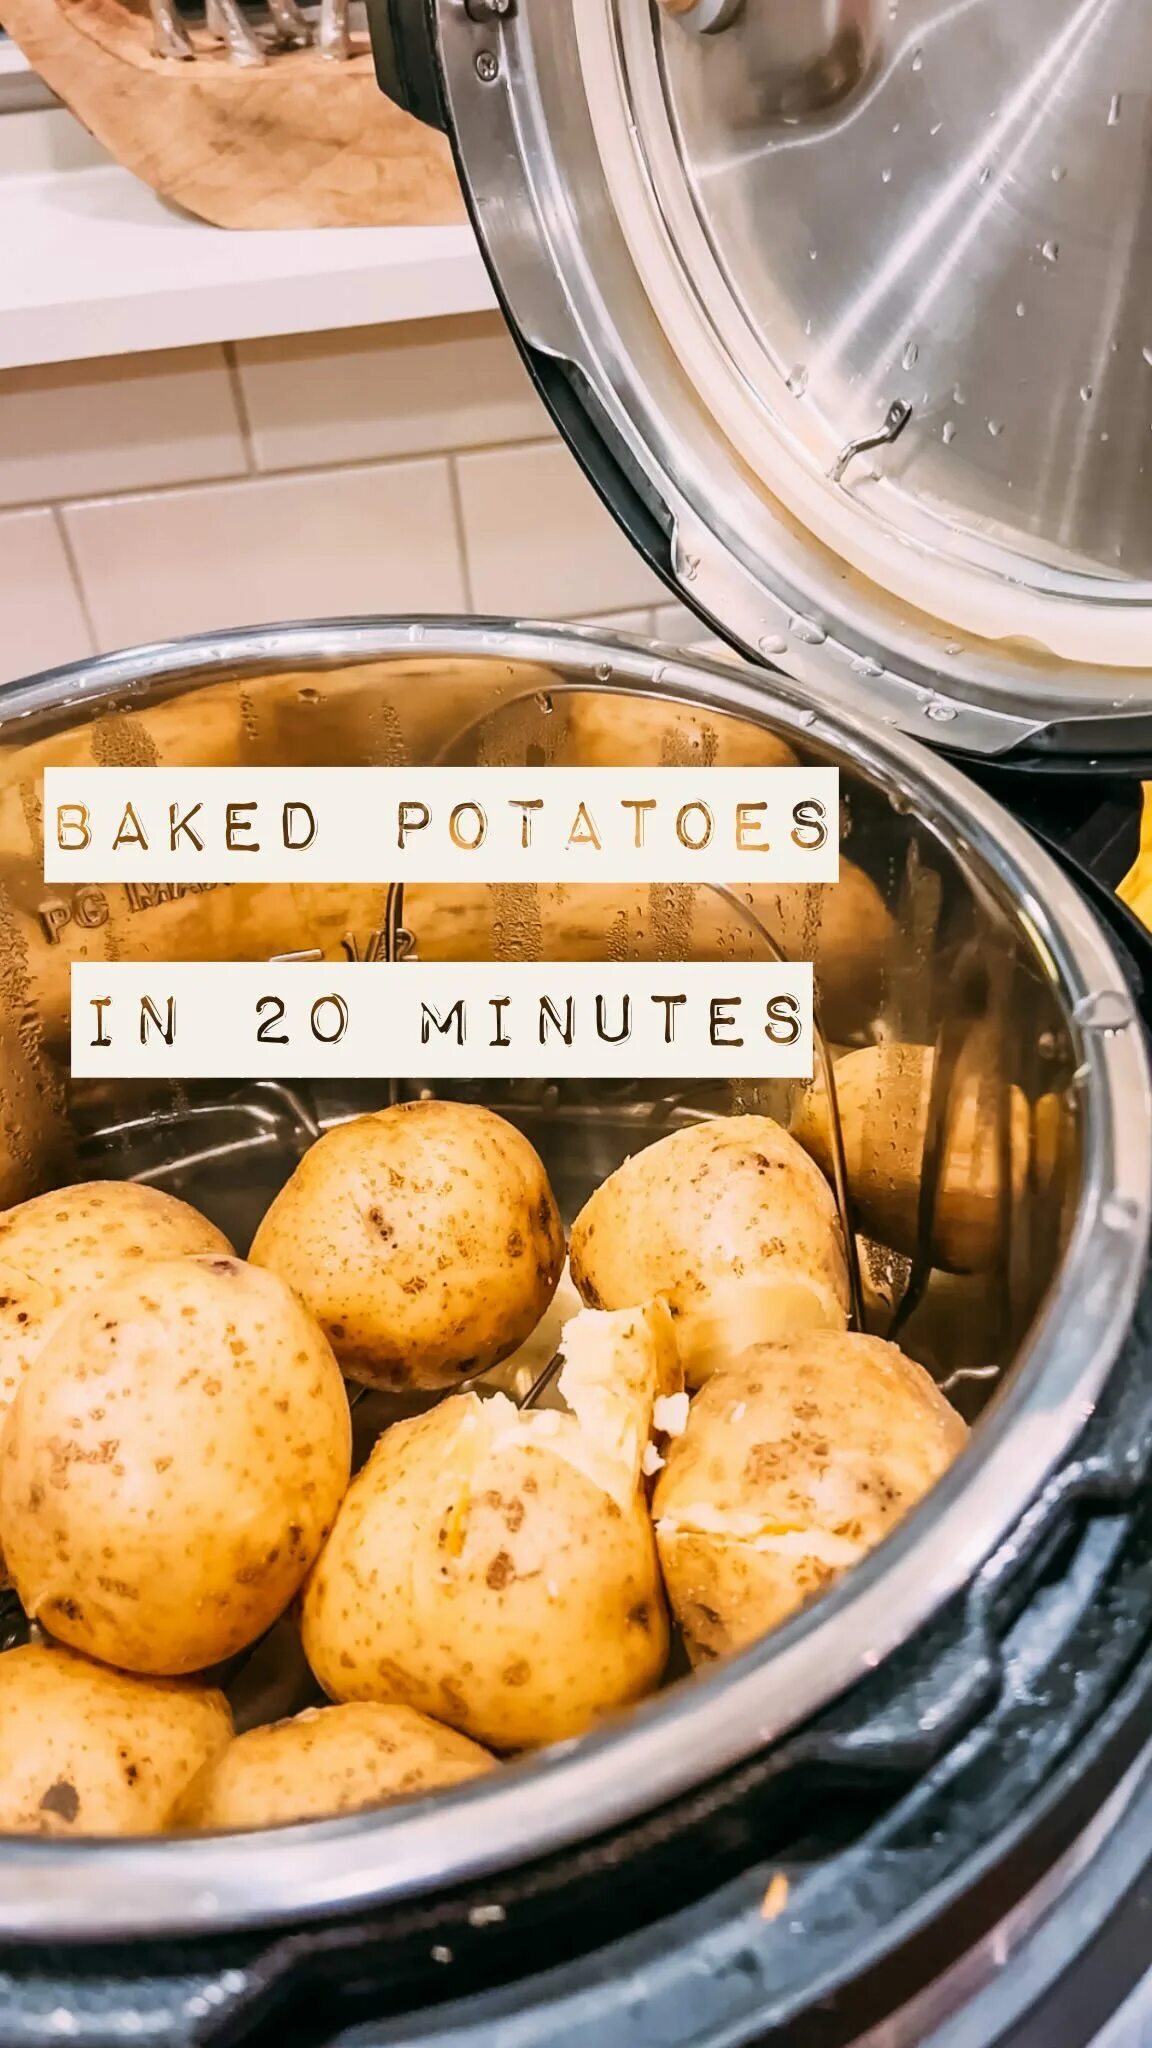 Steam bake potatoes фото 83